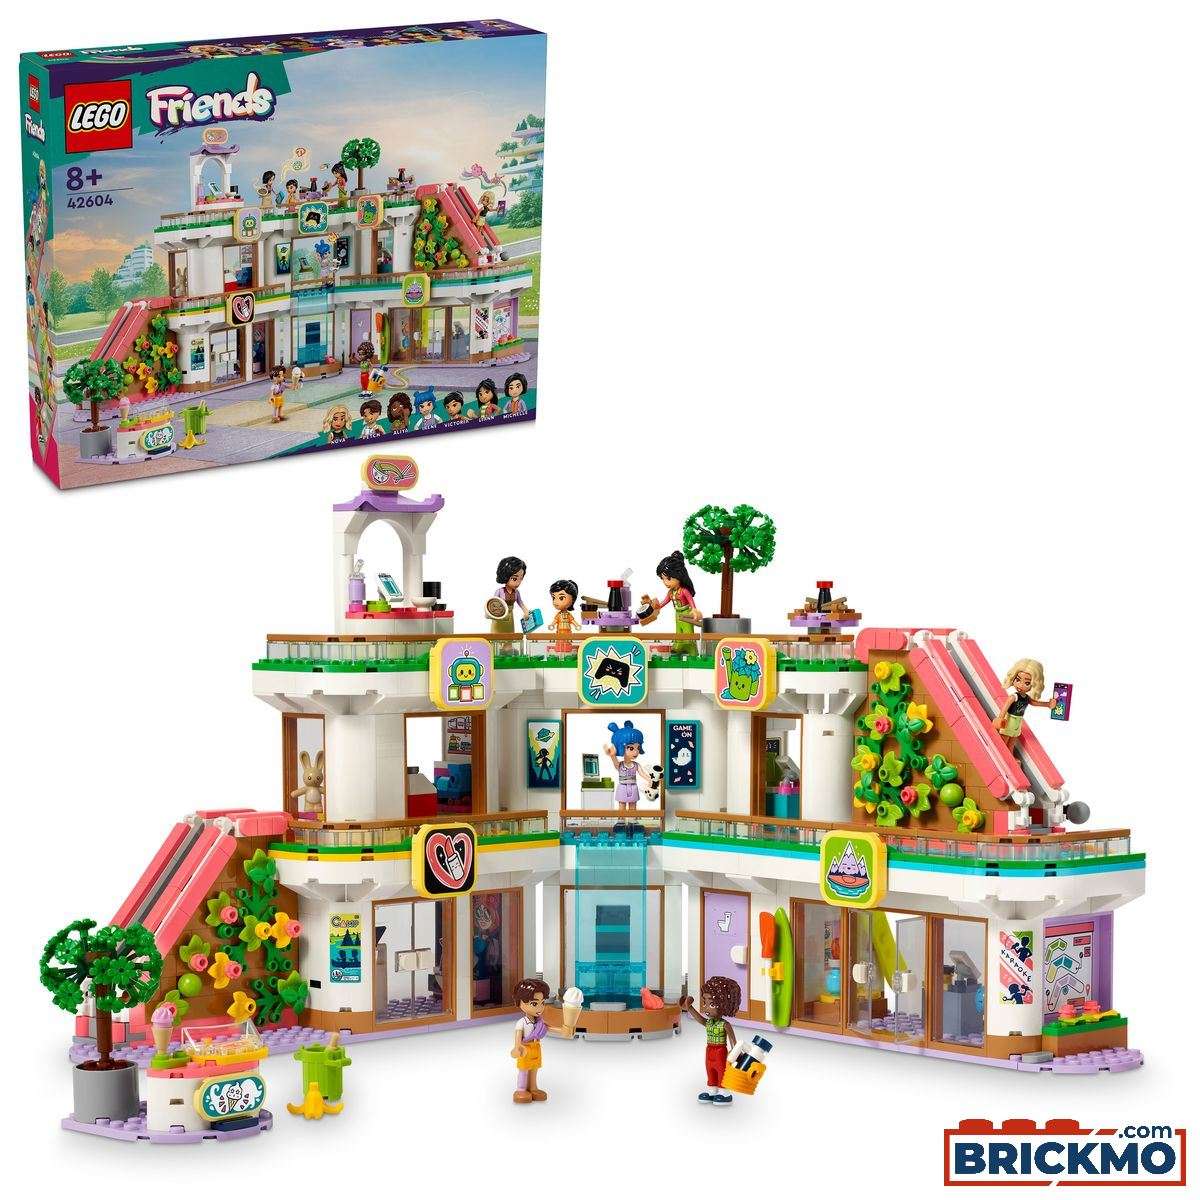 LEGO Friends 42604 Heartlake City winkelcentrum 42604